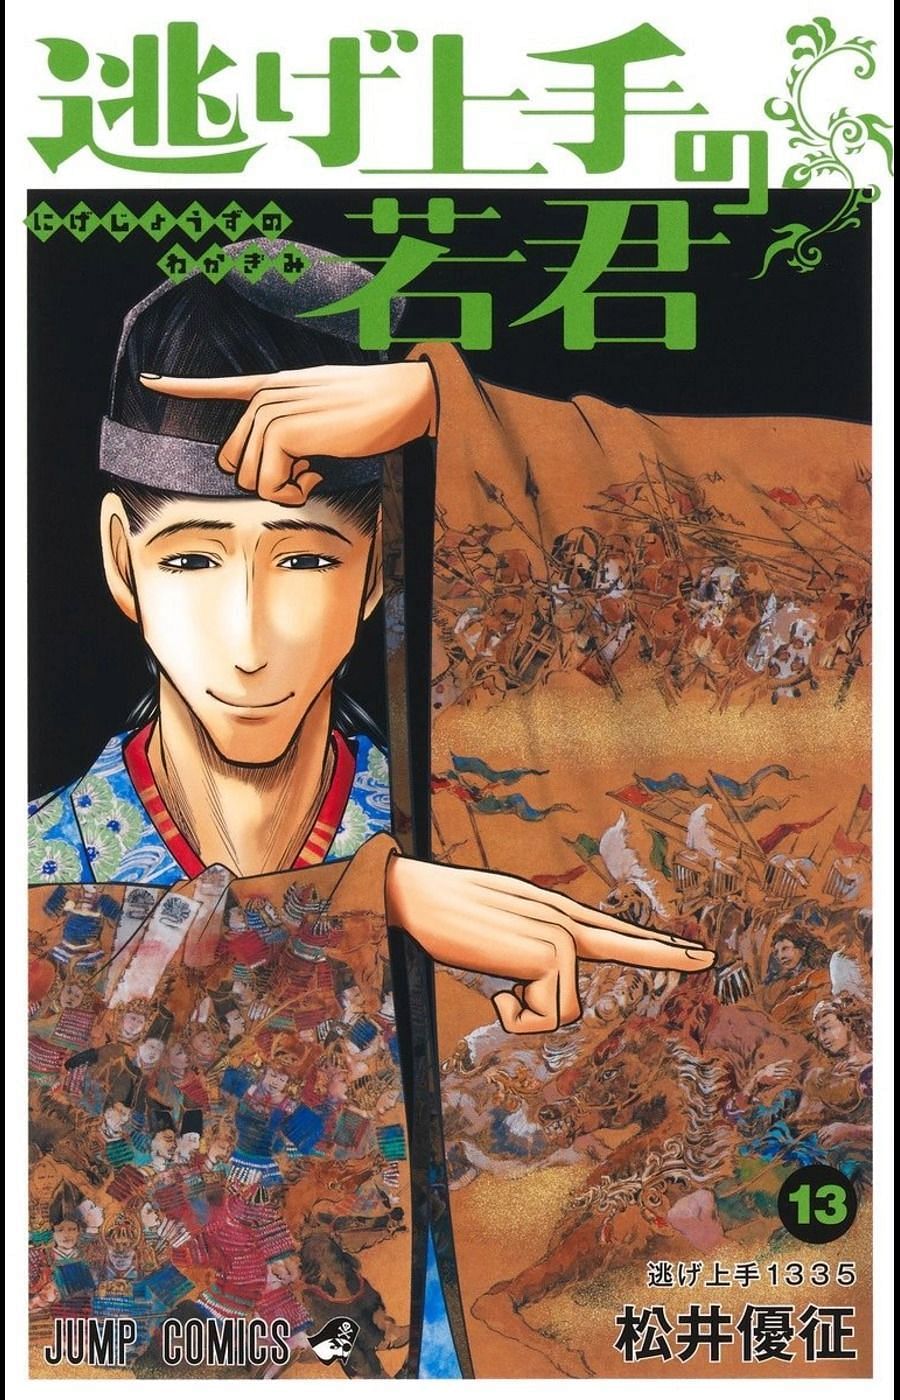 Volume 13 of The Elusive Samurai added to the manga&#039;s sales (Image via X)